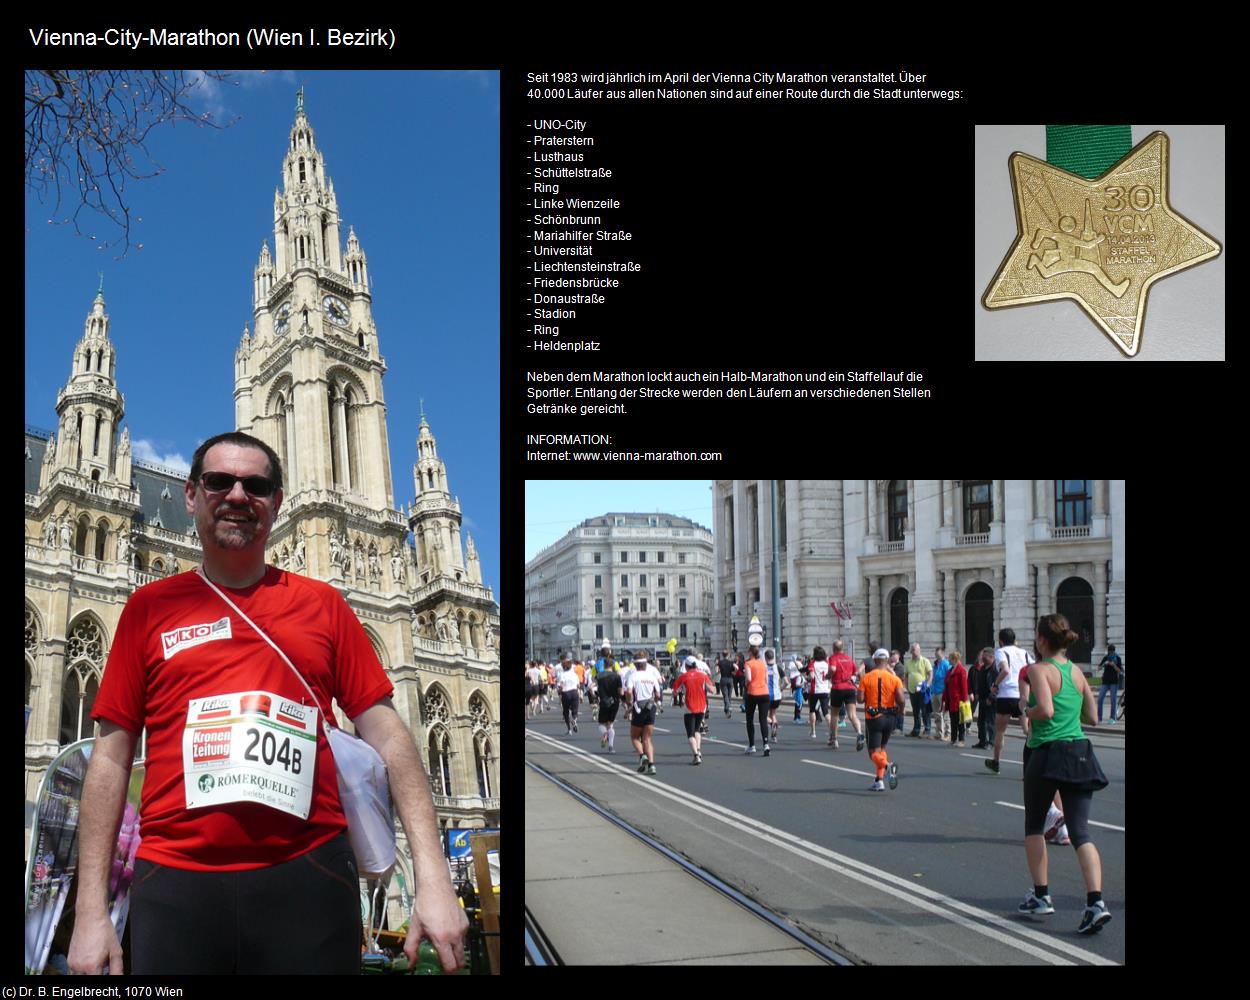 Vienna-City-Marathon (I. Bezirk-Innere Stadt) in Kulturatlas-WIEN